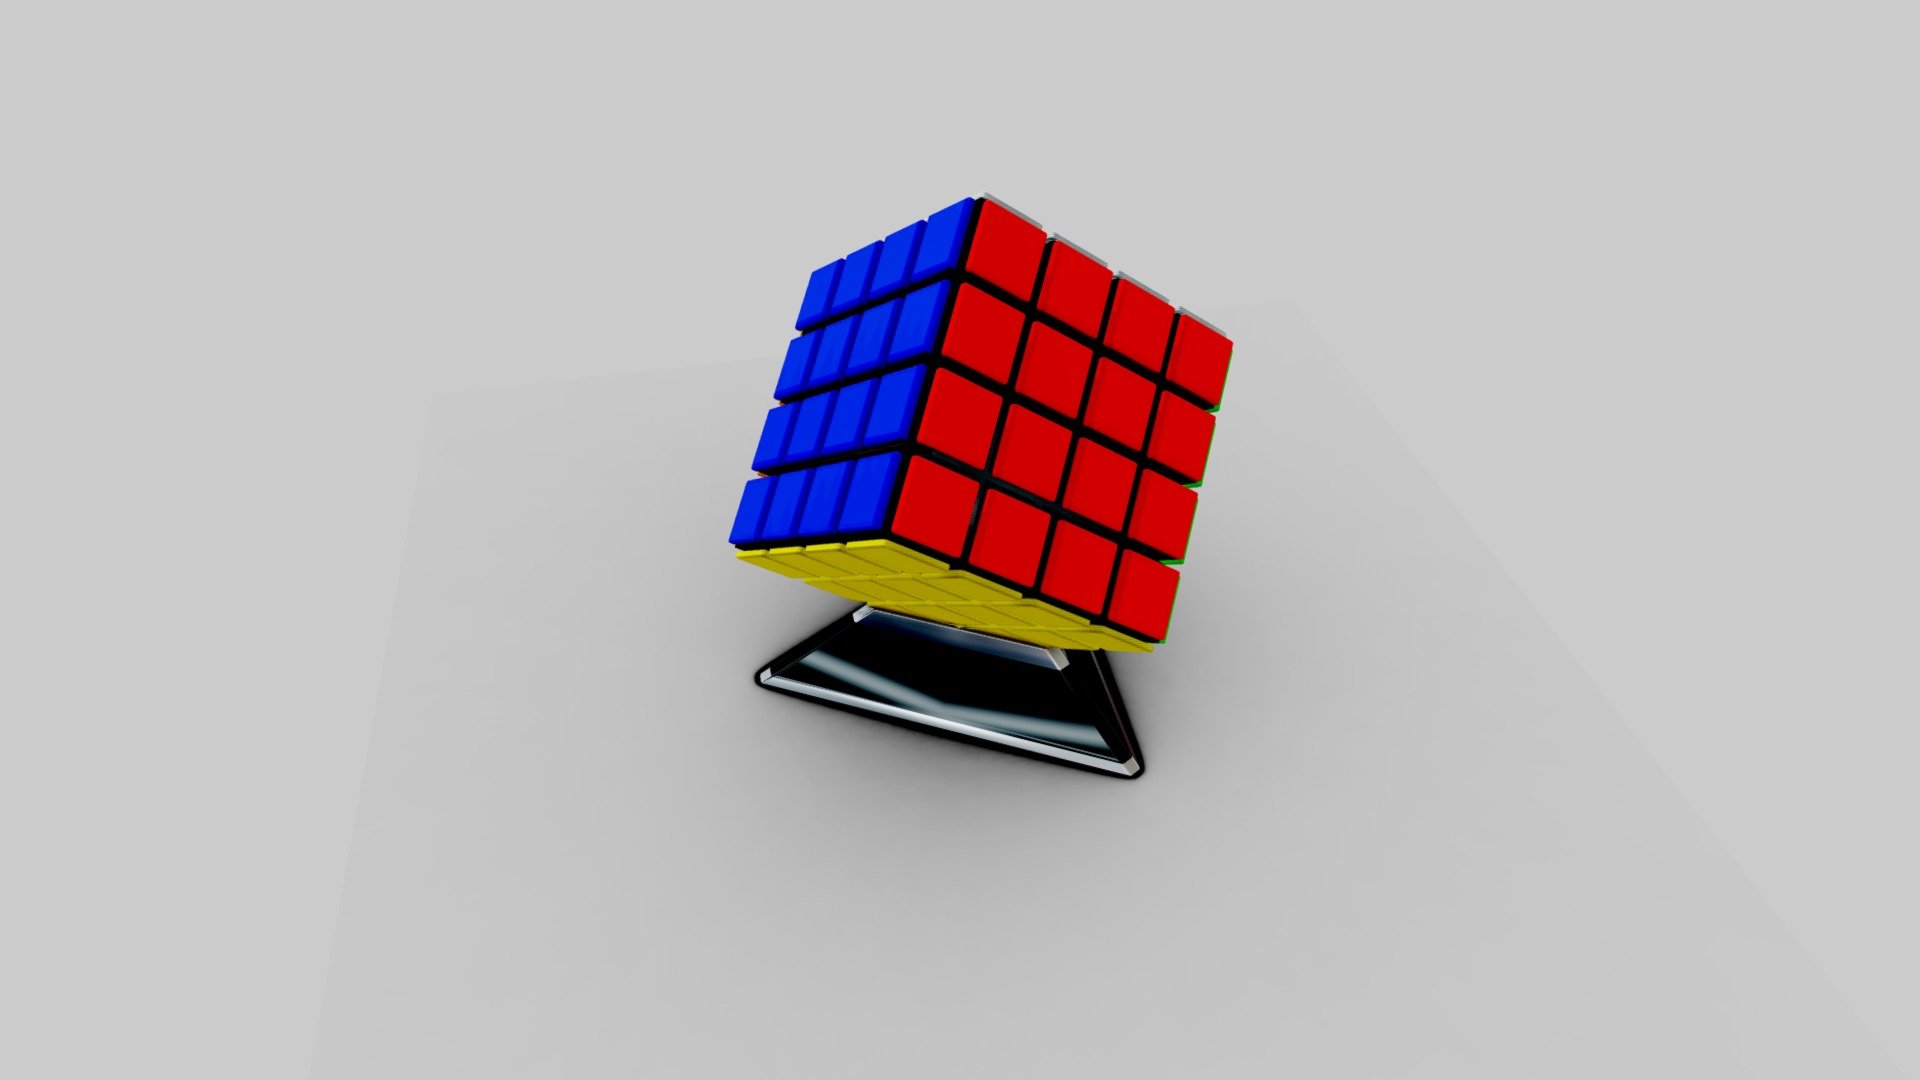 Rubik's Cube 4X4 - 3D model by 3DMode (@3DModele) [333552e]